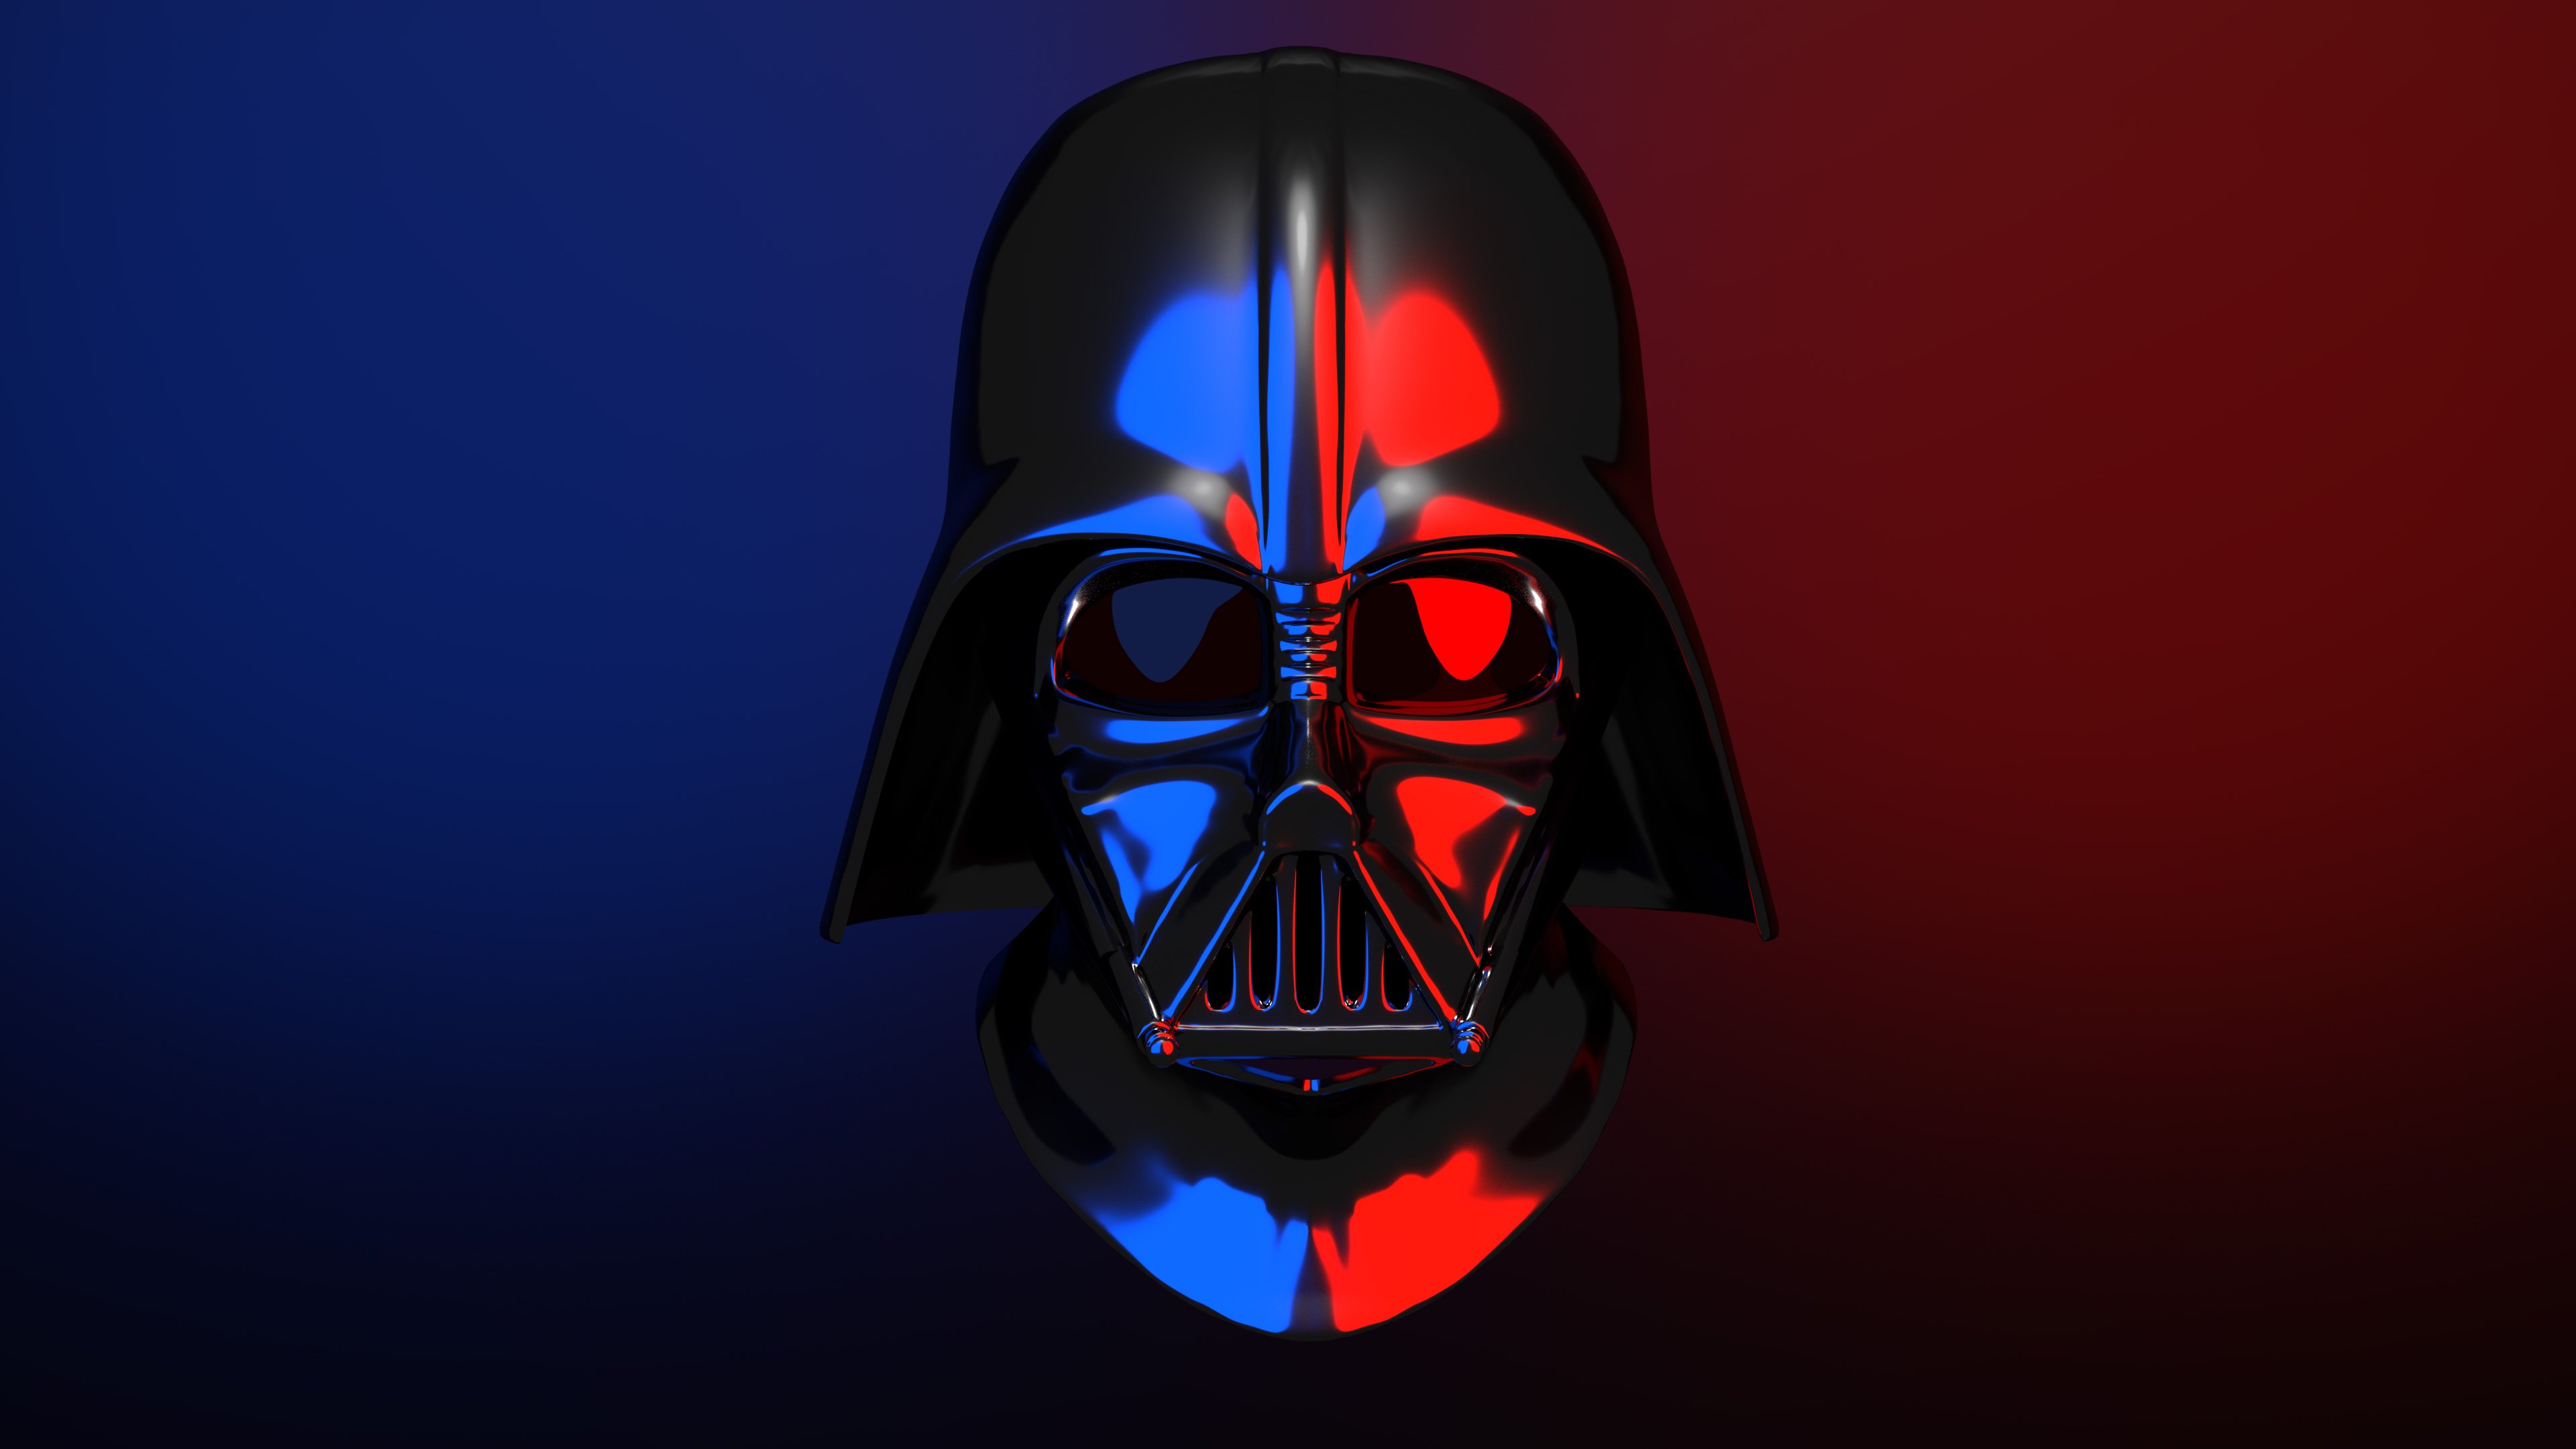 Vader 4k Wallpaper For Your Desktop Or Mobile Screen And